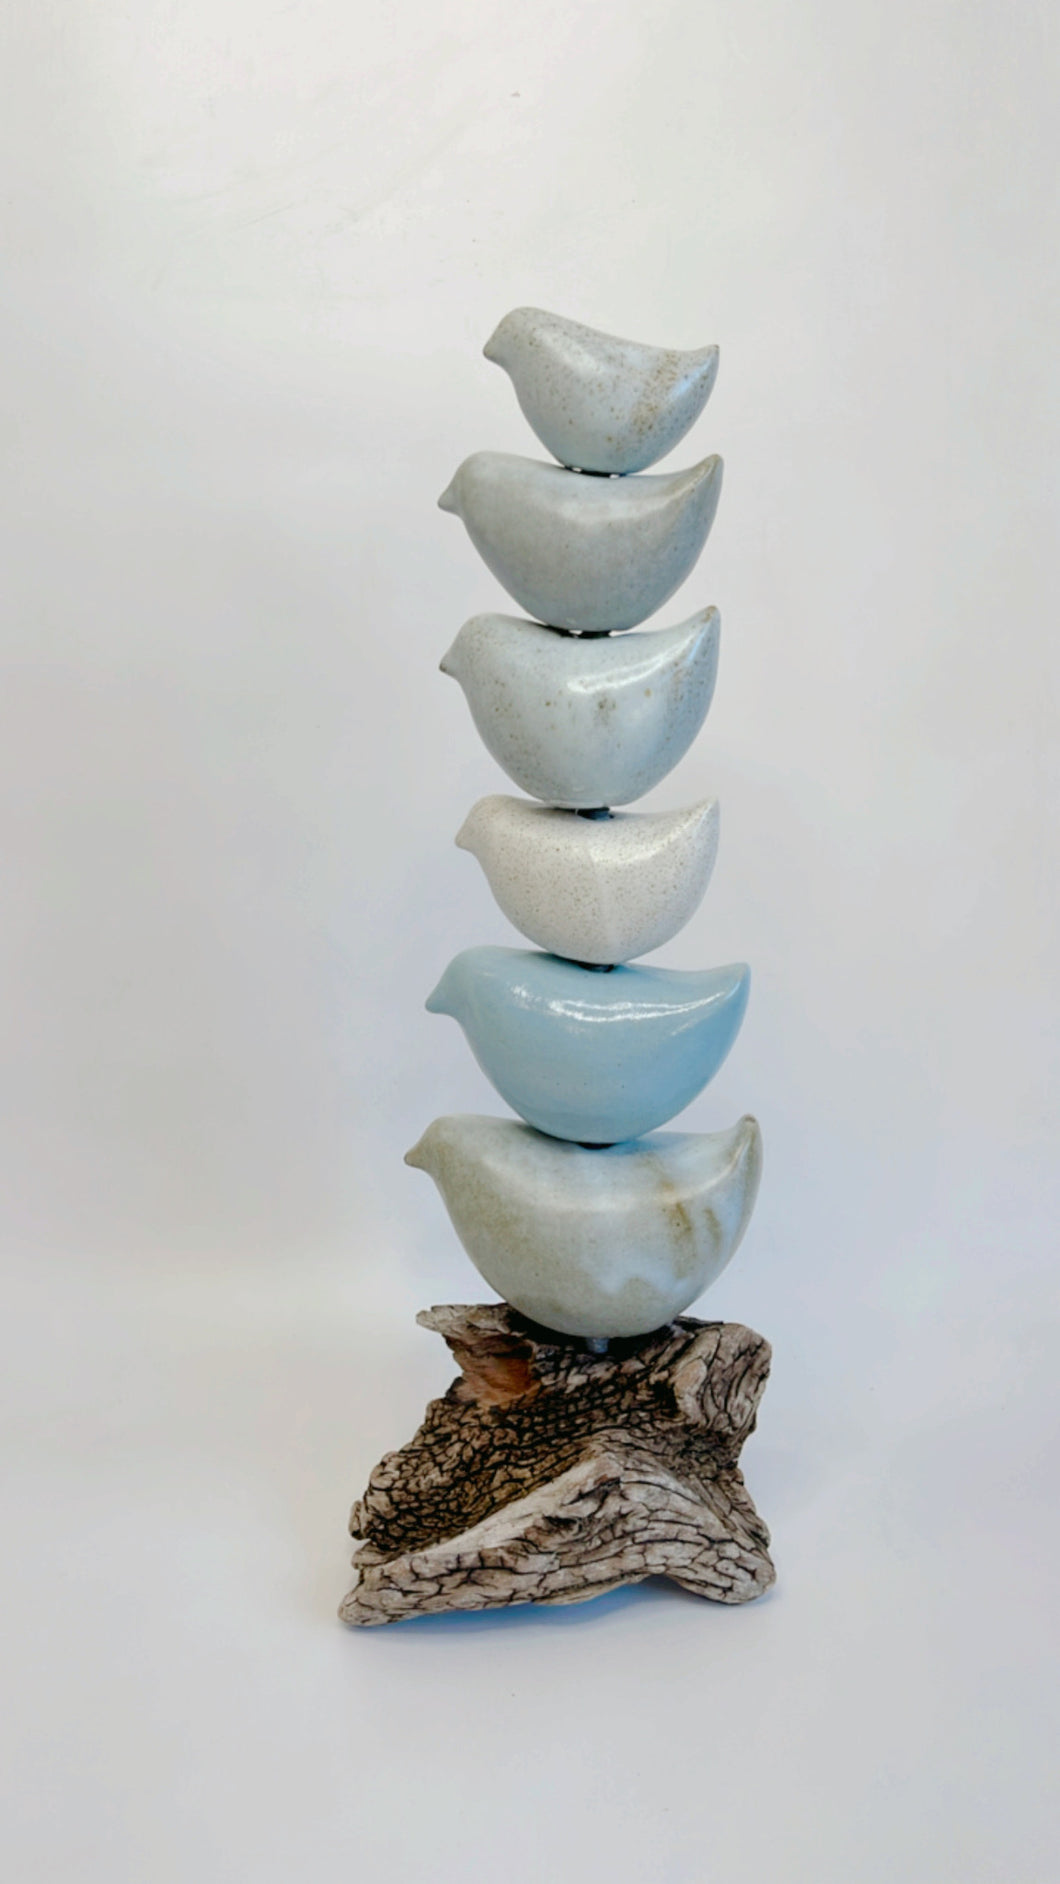 Ceramic Totem sculpture with 6 ceramic birds in shades of pale blue.